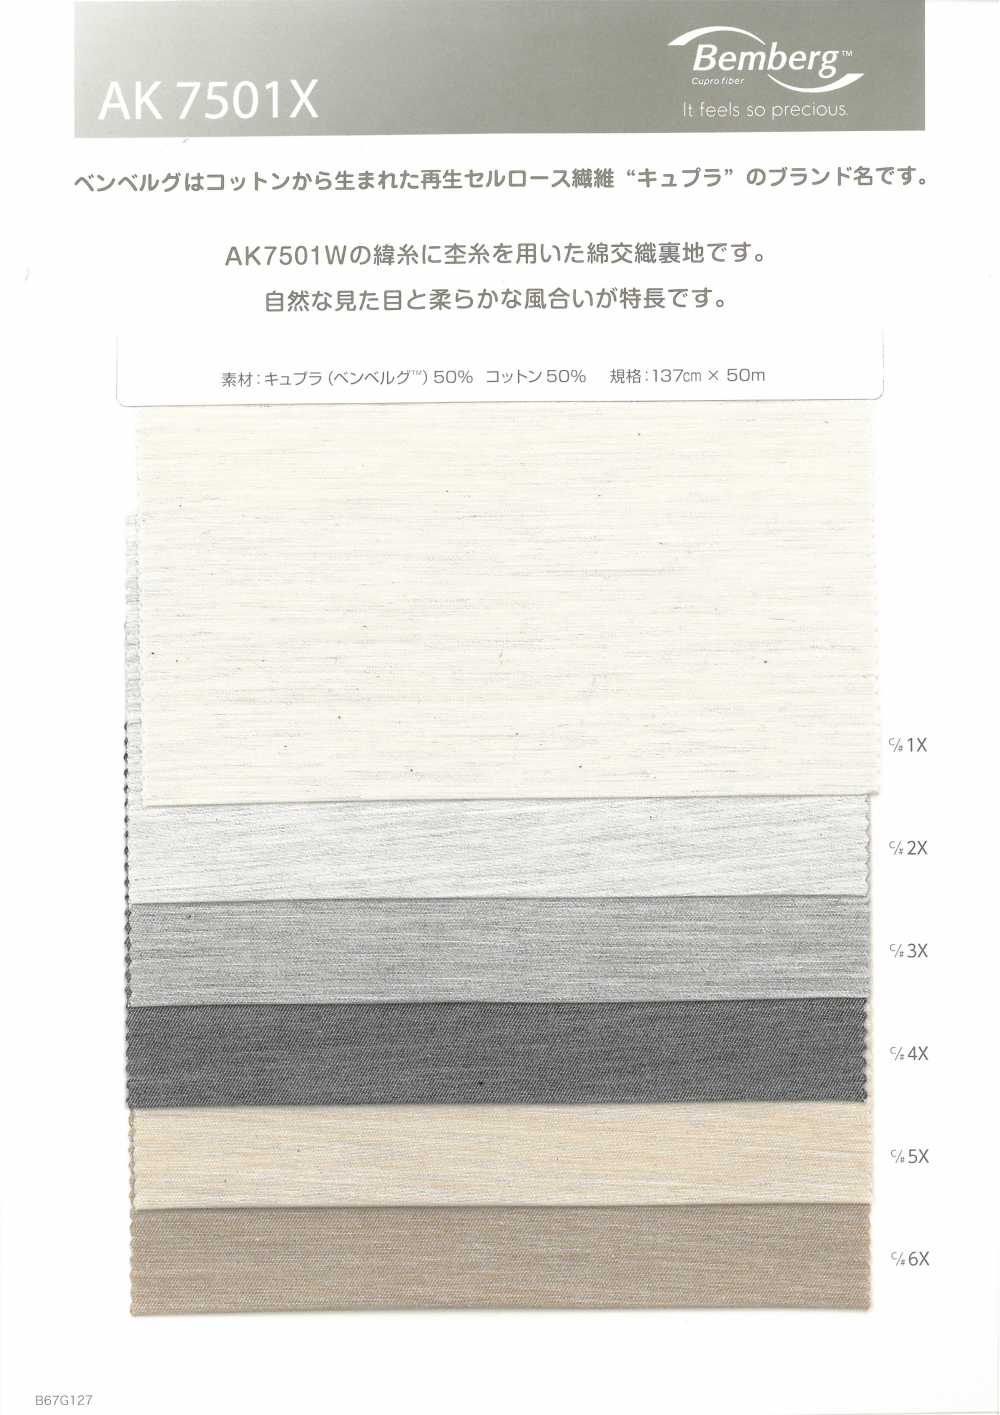 AK7501X Vải Lót Sợi Xù Cupro Cotton Asahi KASEI